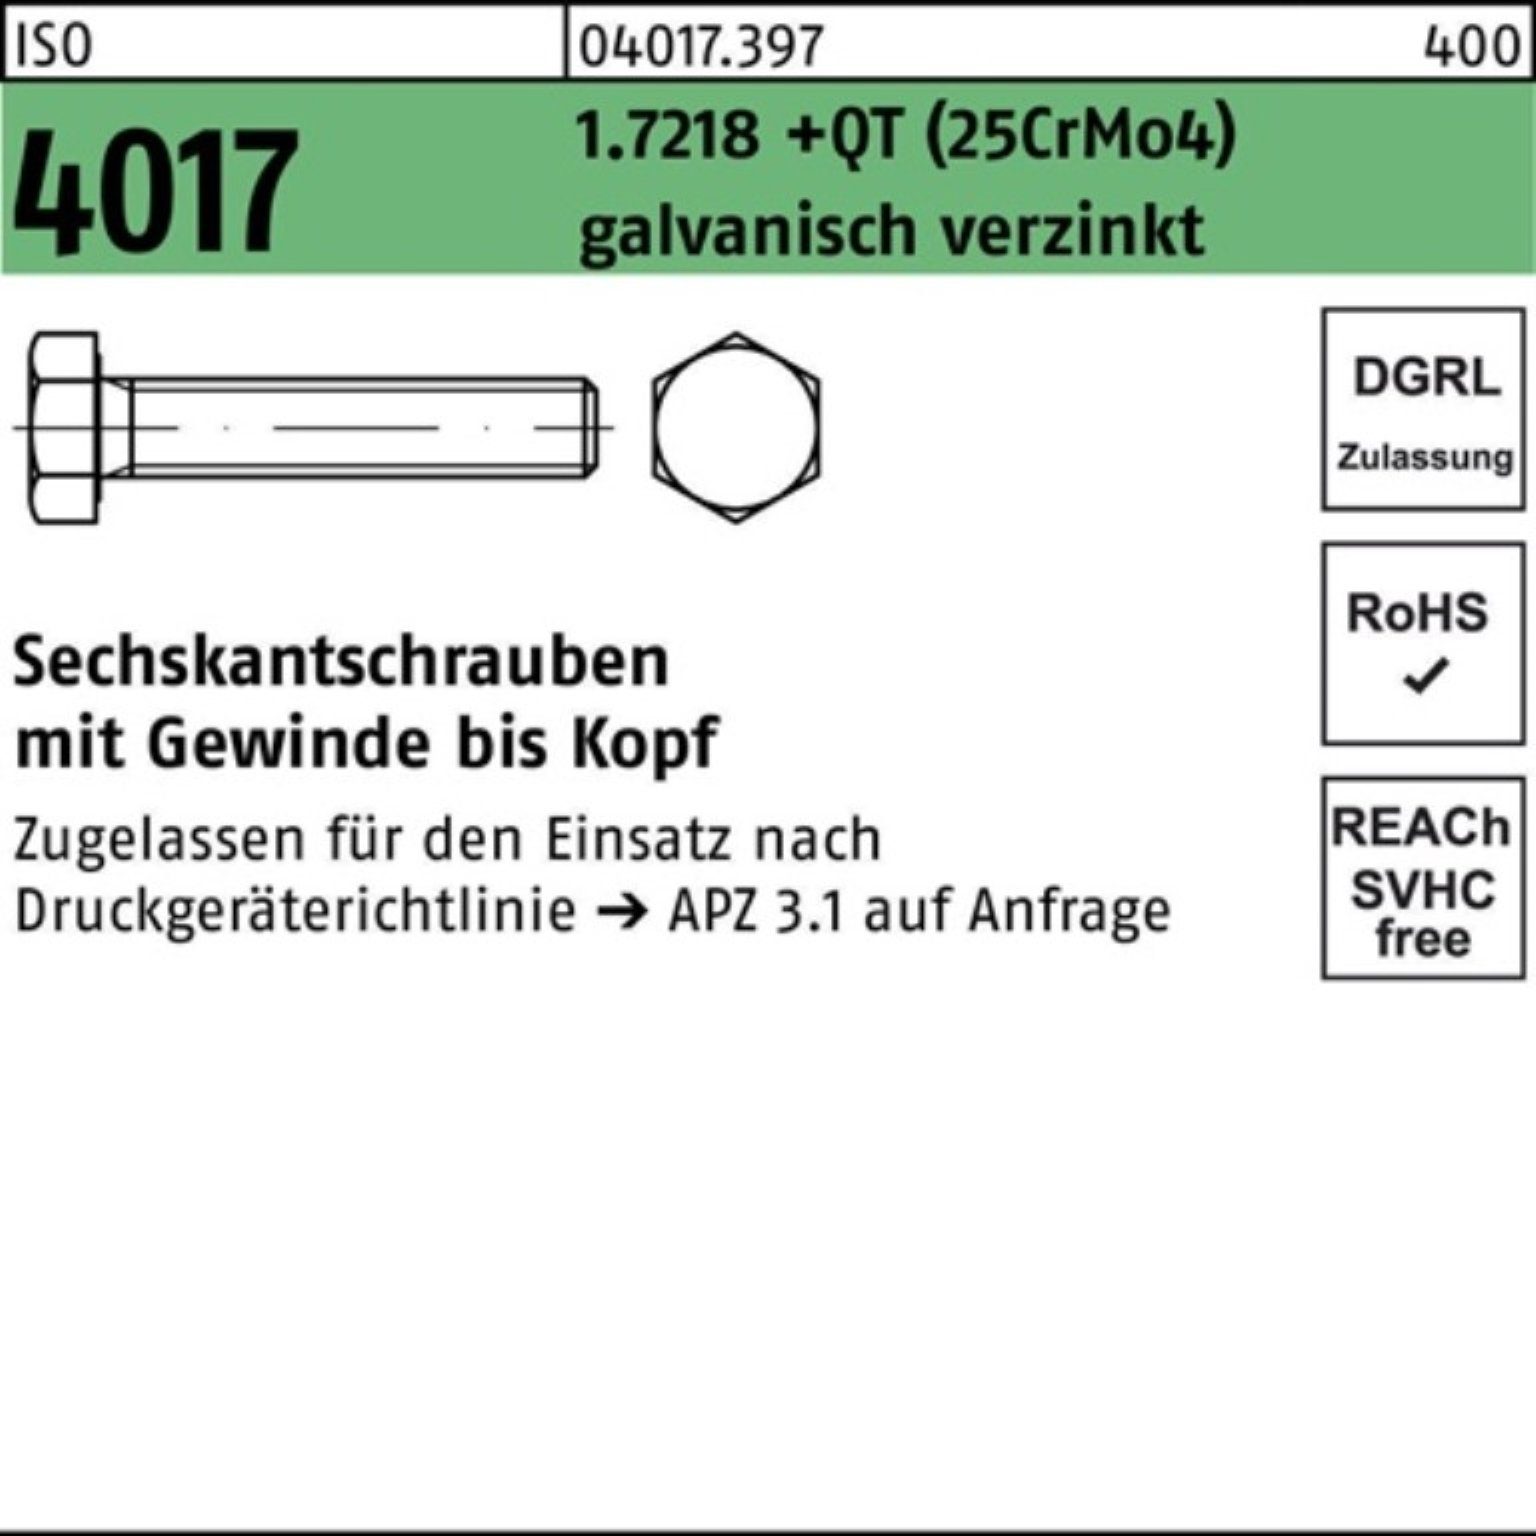 Bufab Sechskantschraube 100er Pack Sechskantschraube 4017 M20x40 ISO (25CrMo4) +QT g 1.7218 VG